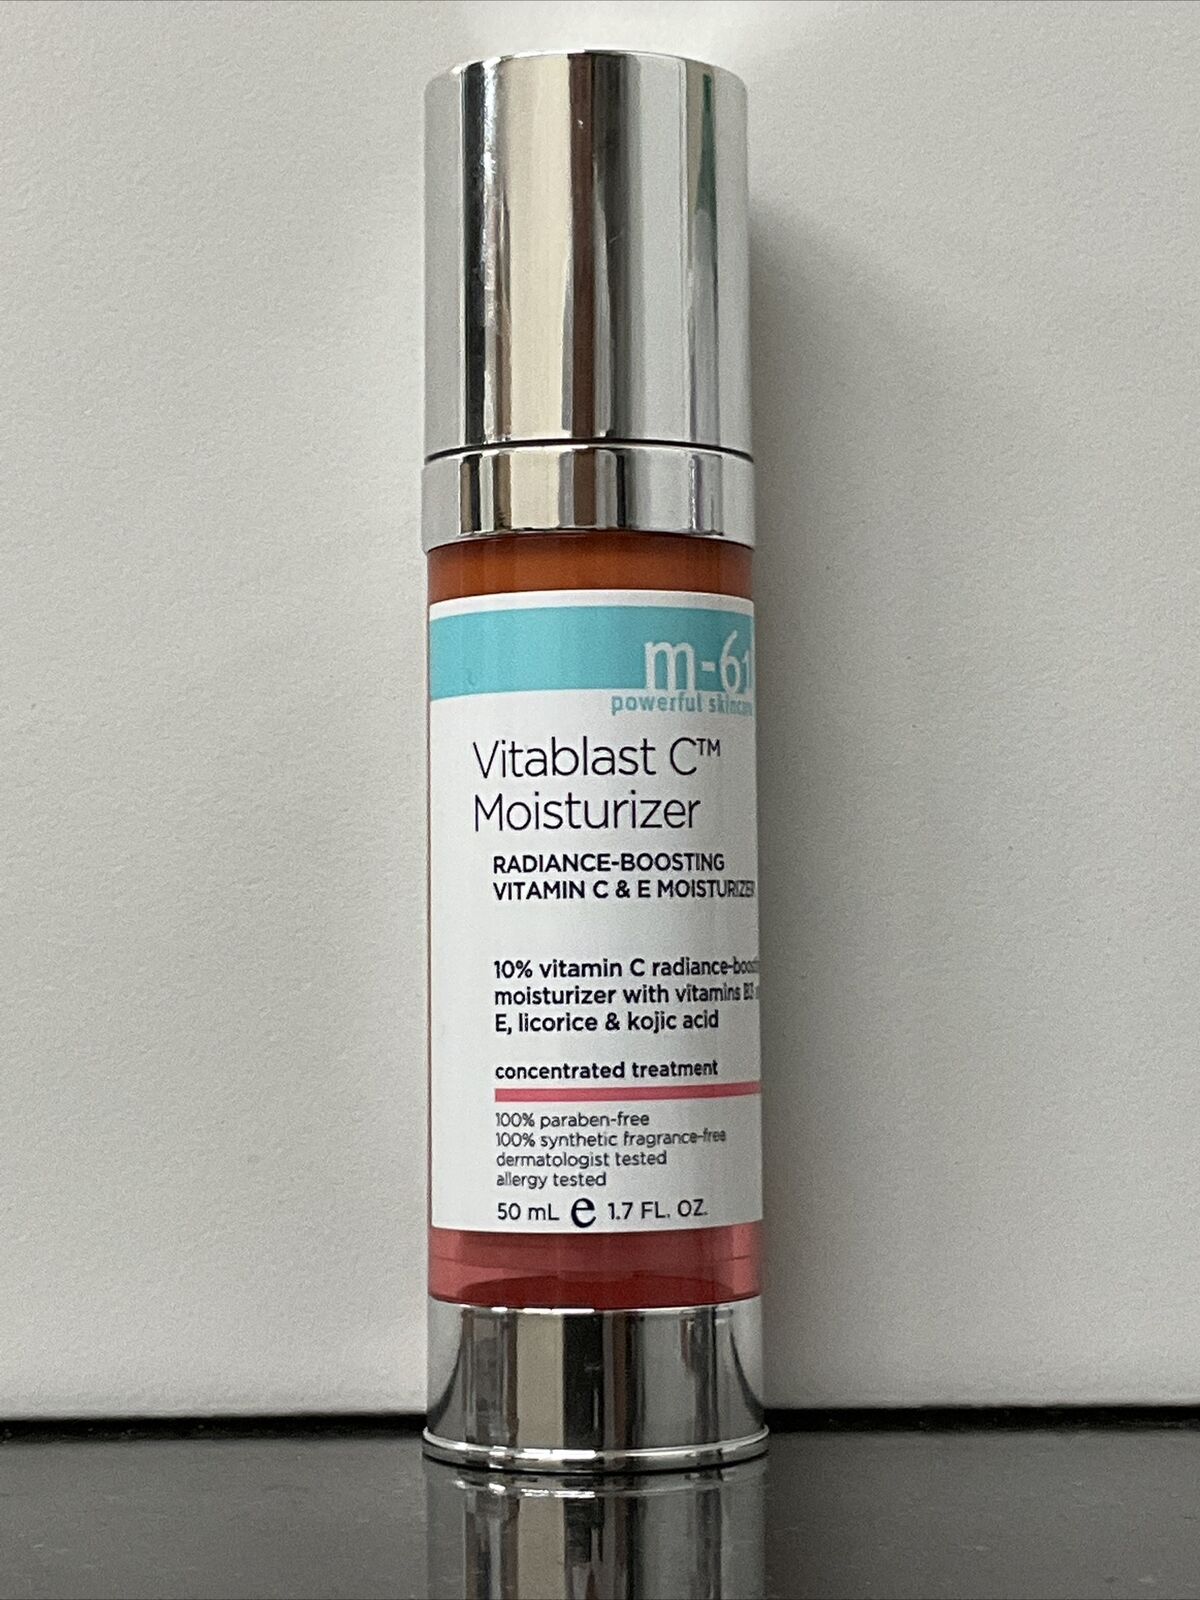 M-61 Powerful Skincare Vitablast Ctm Moisturizer Radiance-Boosting Vitamin 1.7OZ